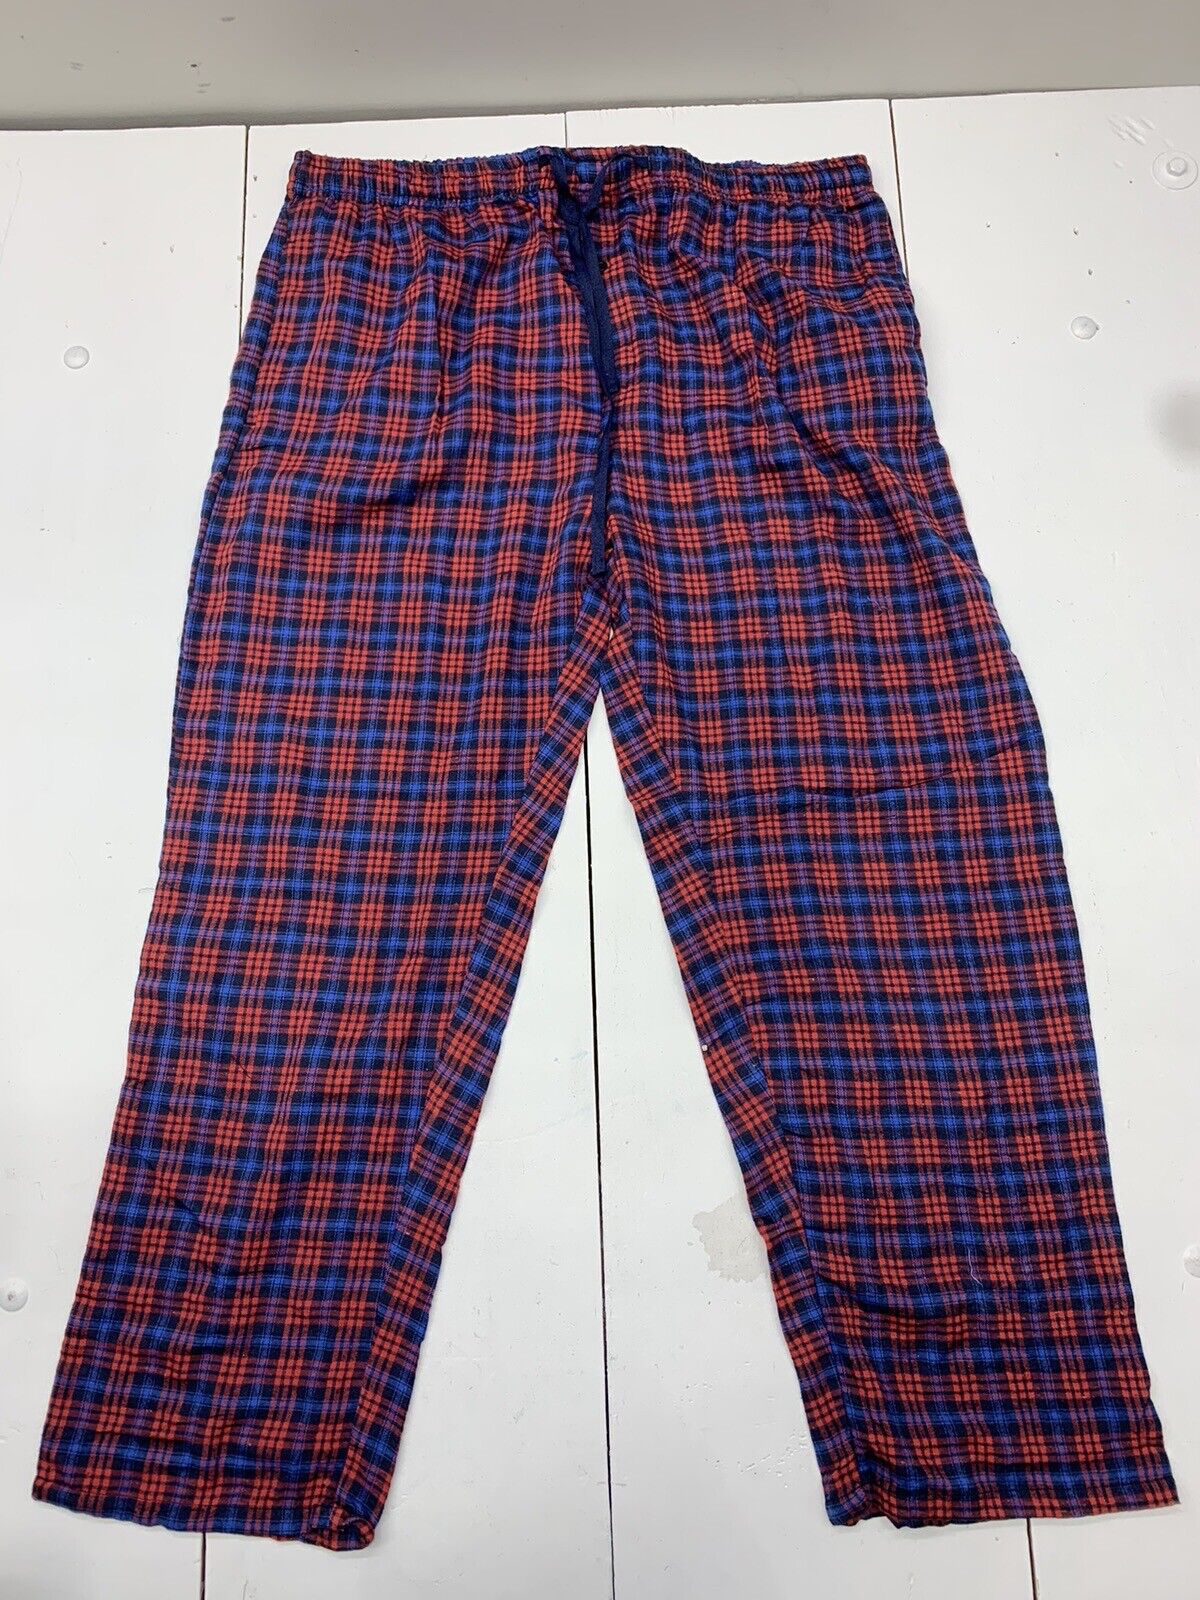 Real Essentials Mens Blue Red Plaid Pajama Pants Size XXXL